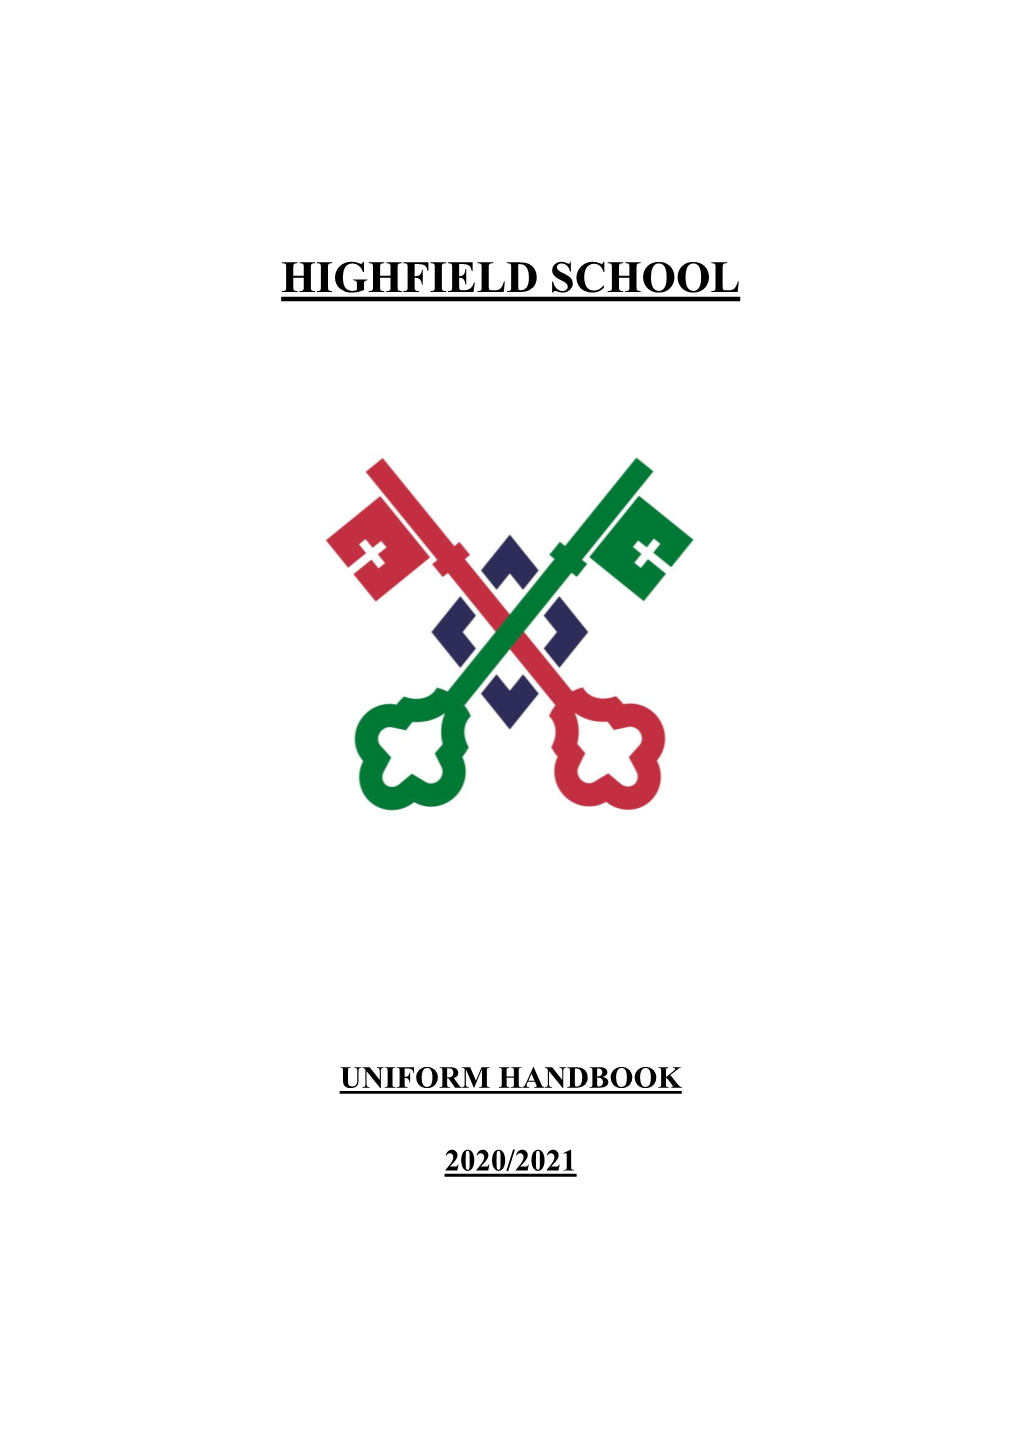 Uniform Handbook 2020/2021